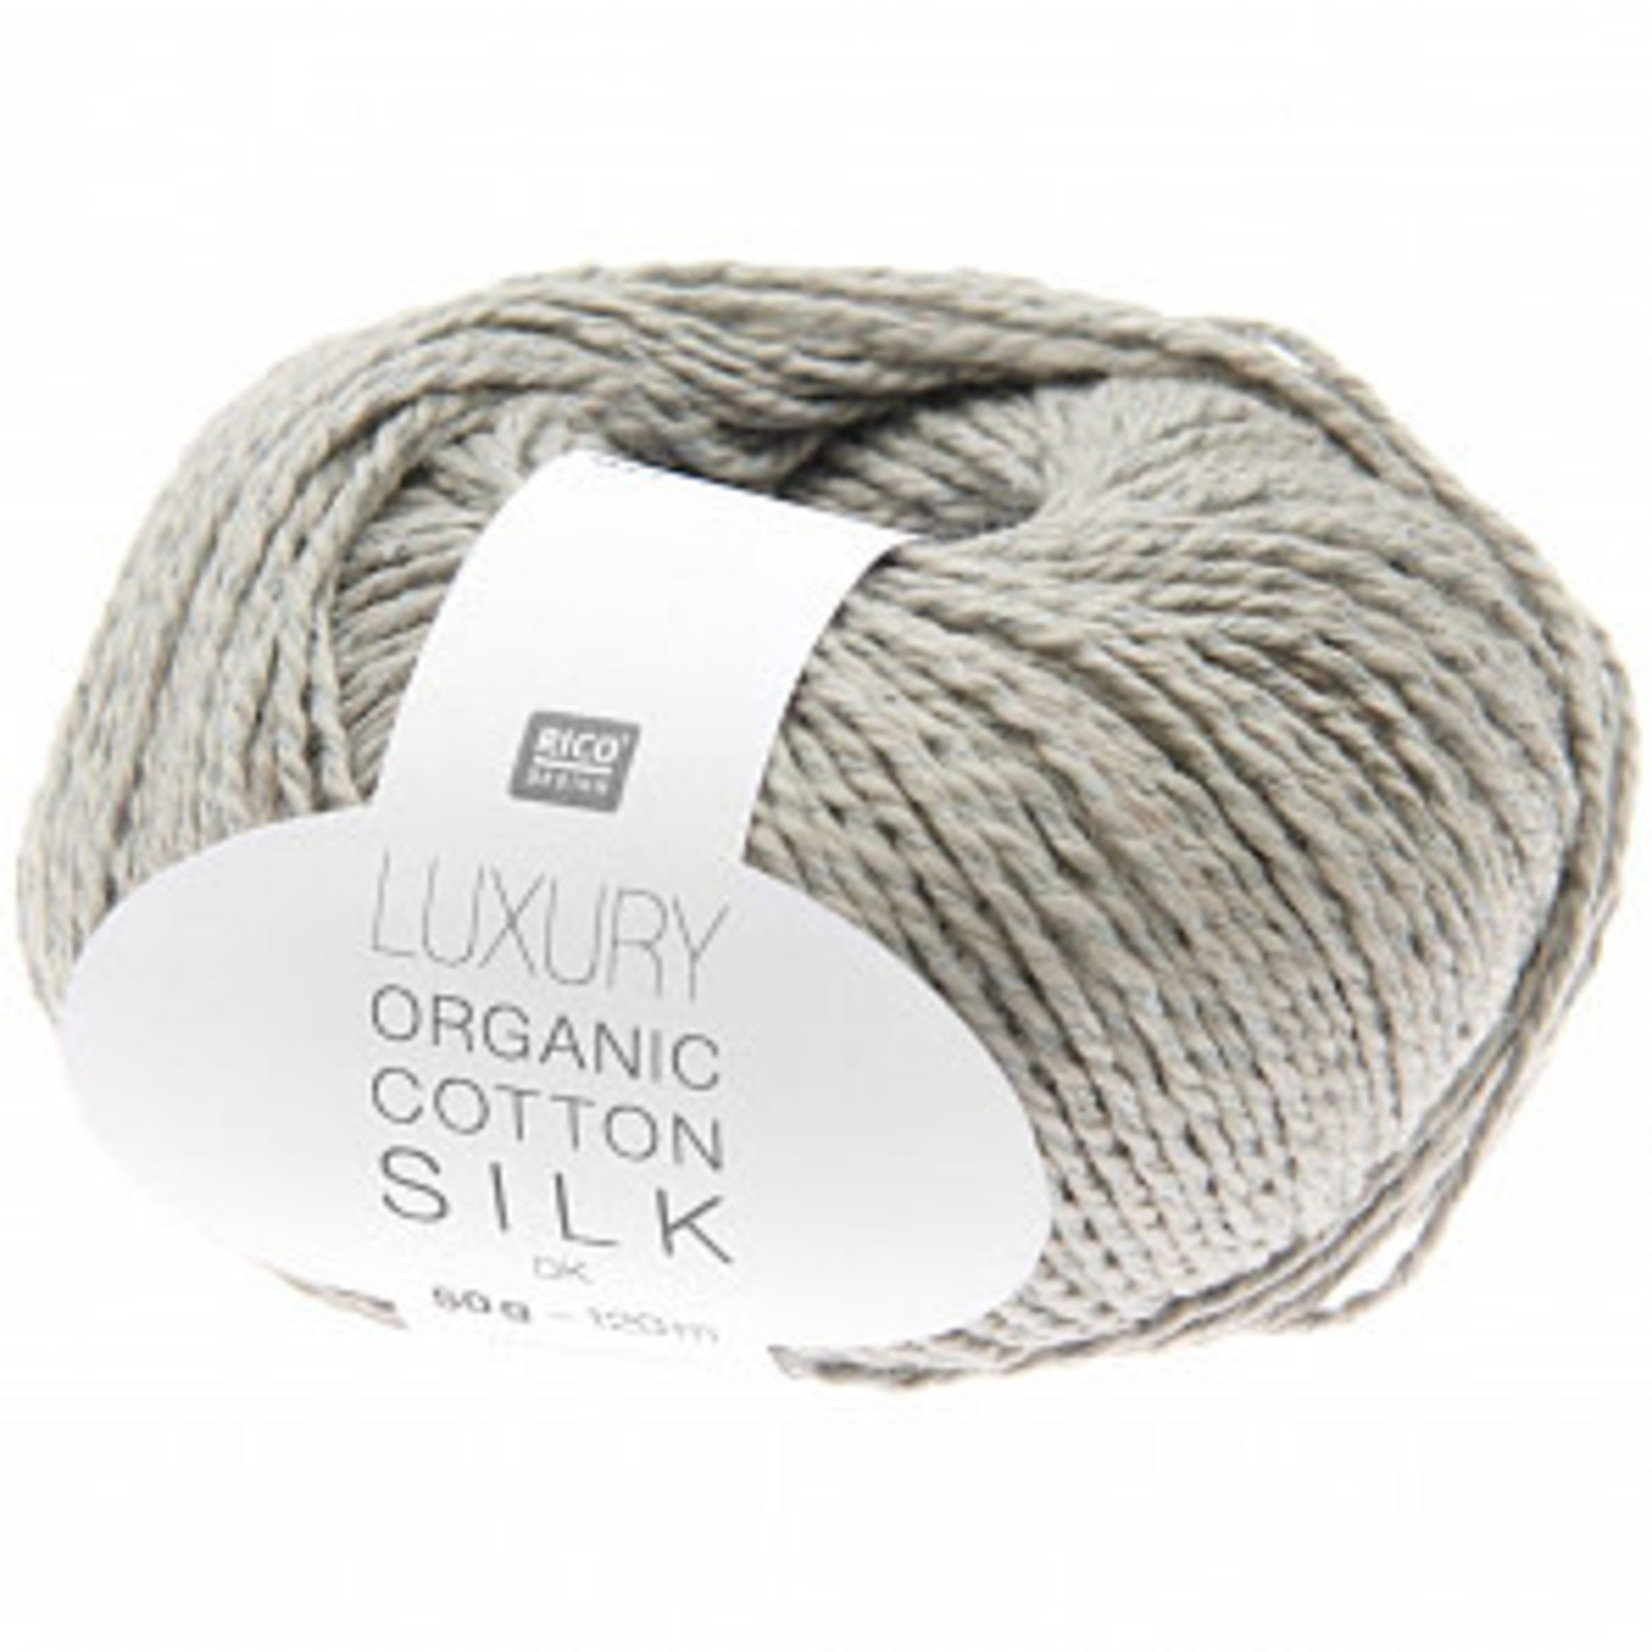 Rico Rico Luxury Organic Cotton Silk dk